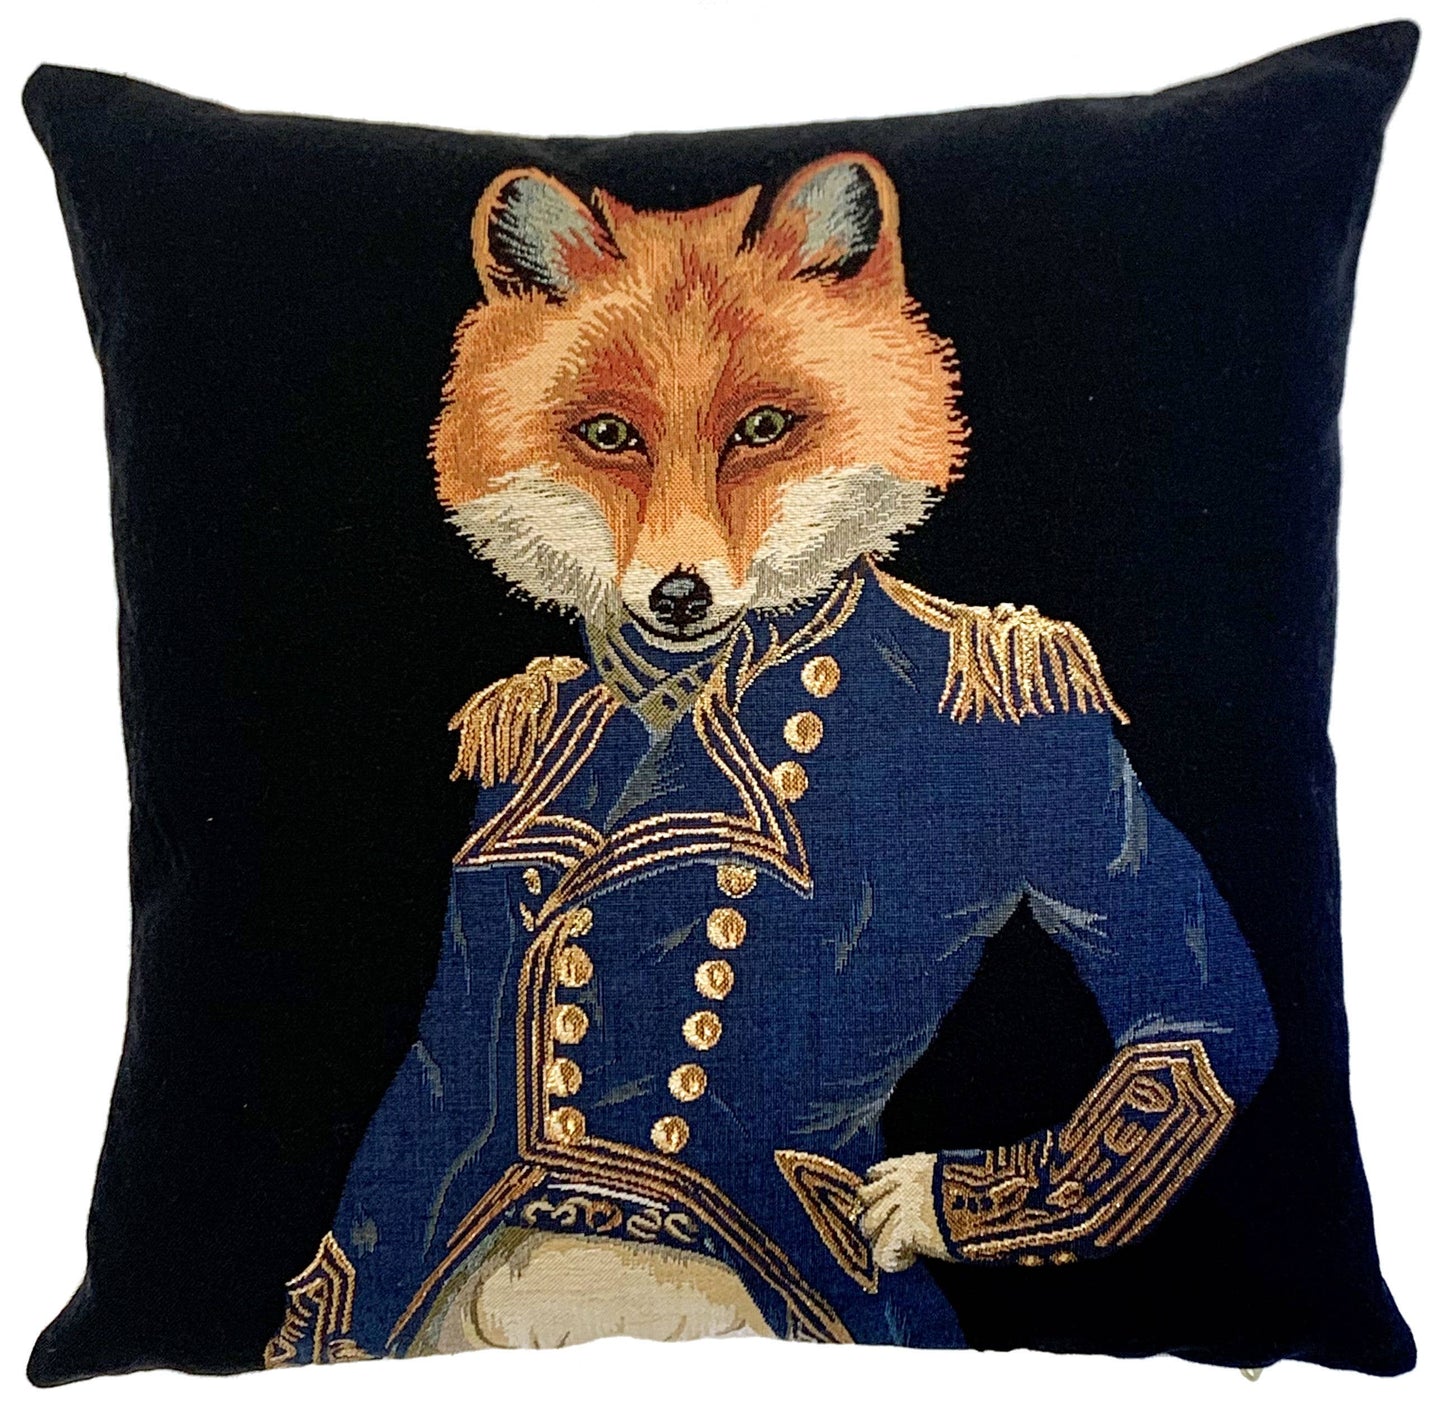 Fox pillow cover - Woodland Decor - Fox Throw Pillow